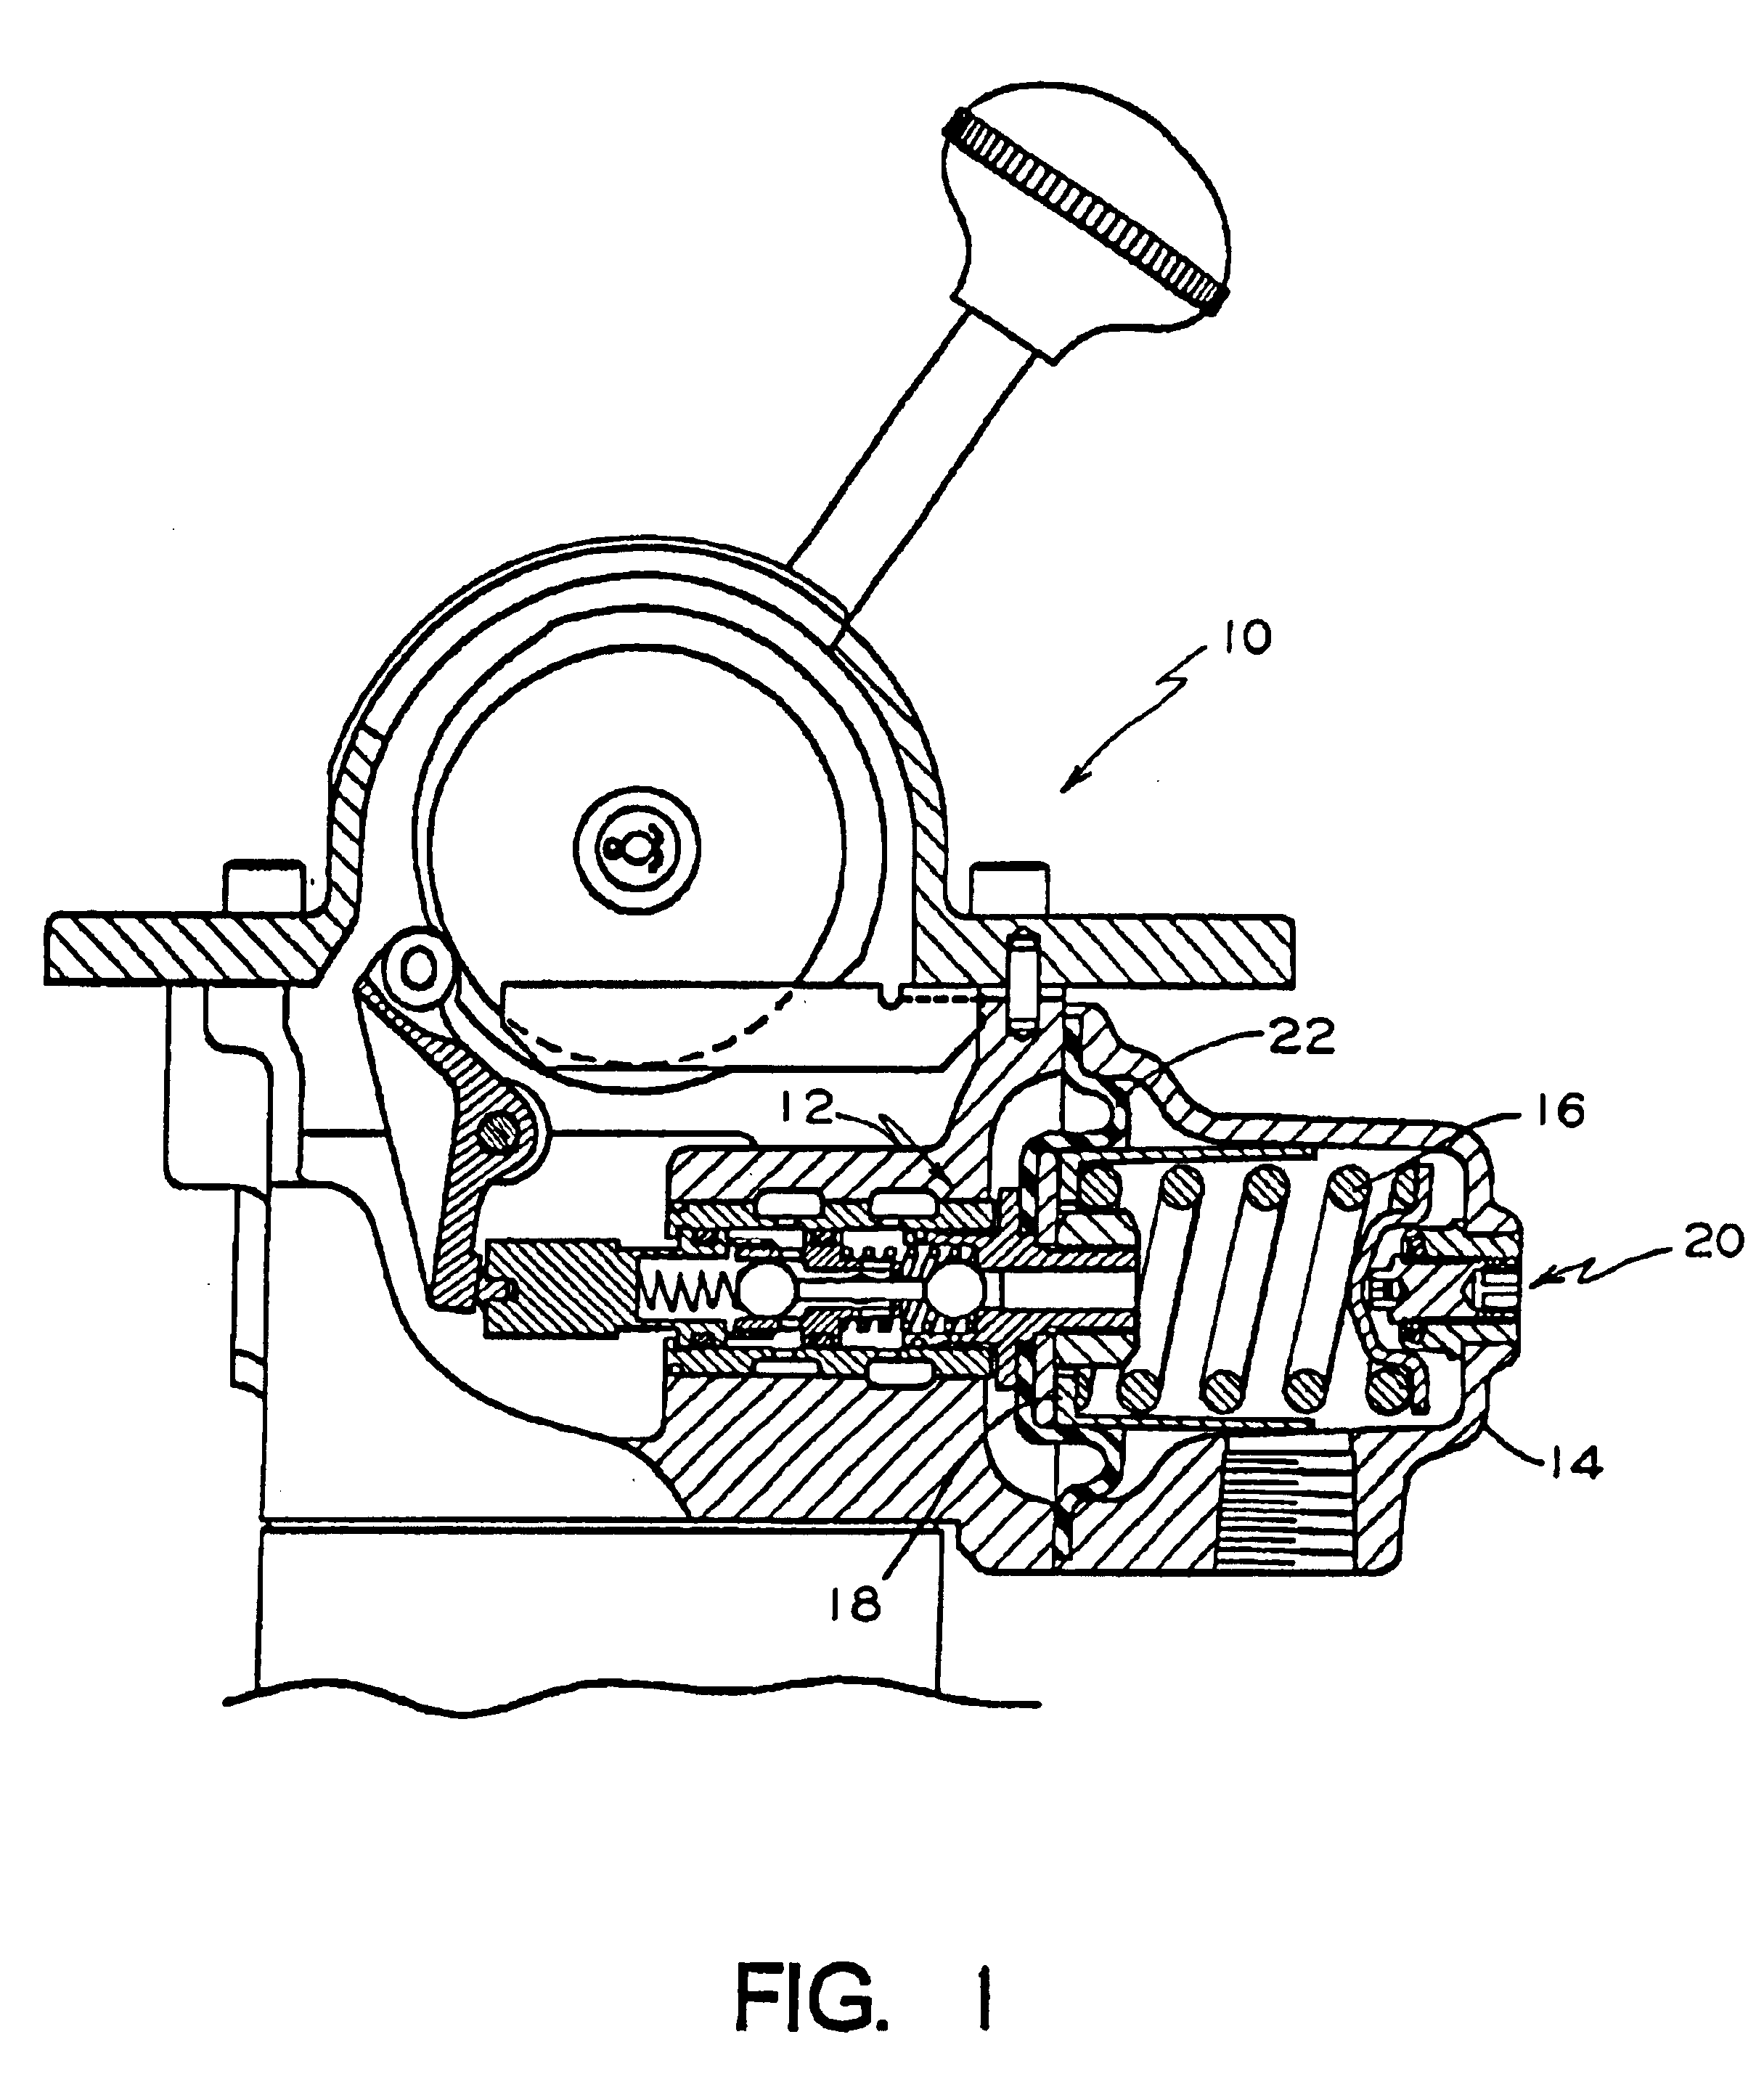 Locomotive brake valve equipped with a range spring dampener